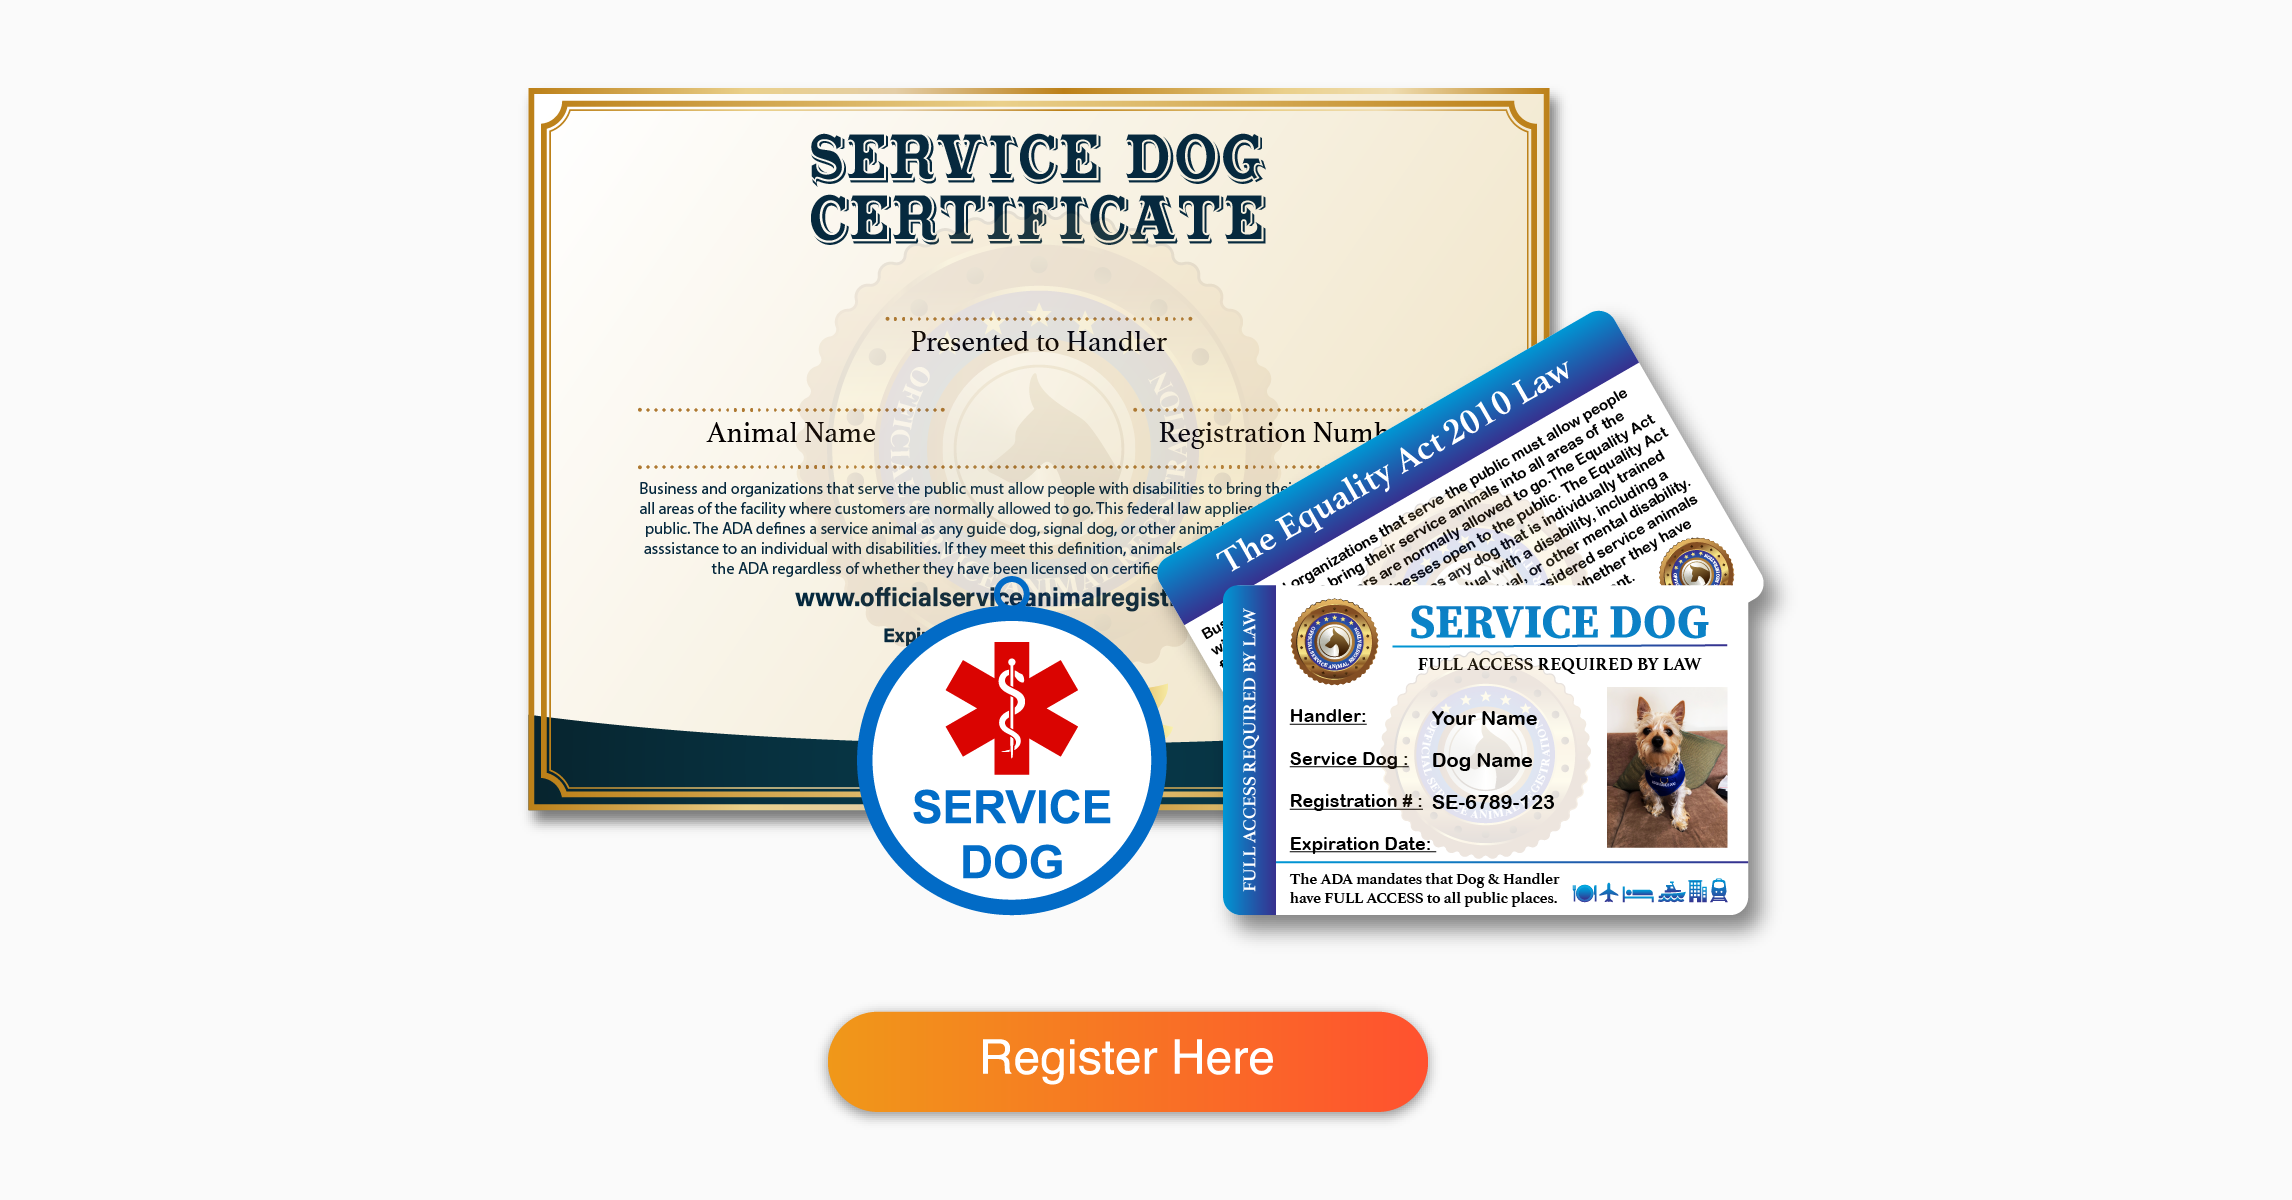 how do you get a service dog certificate